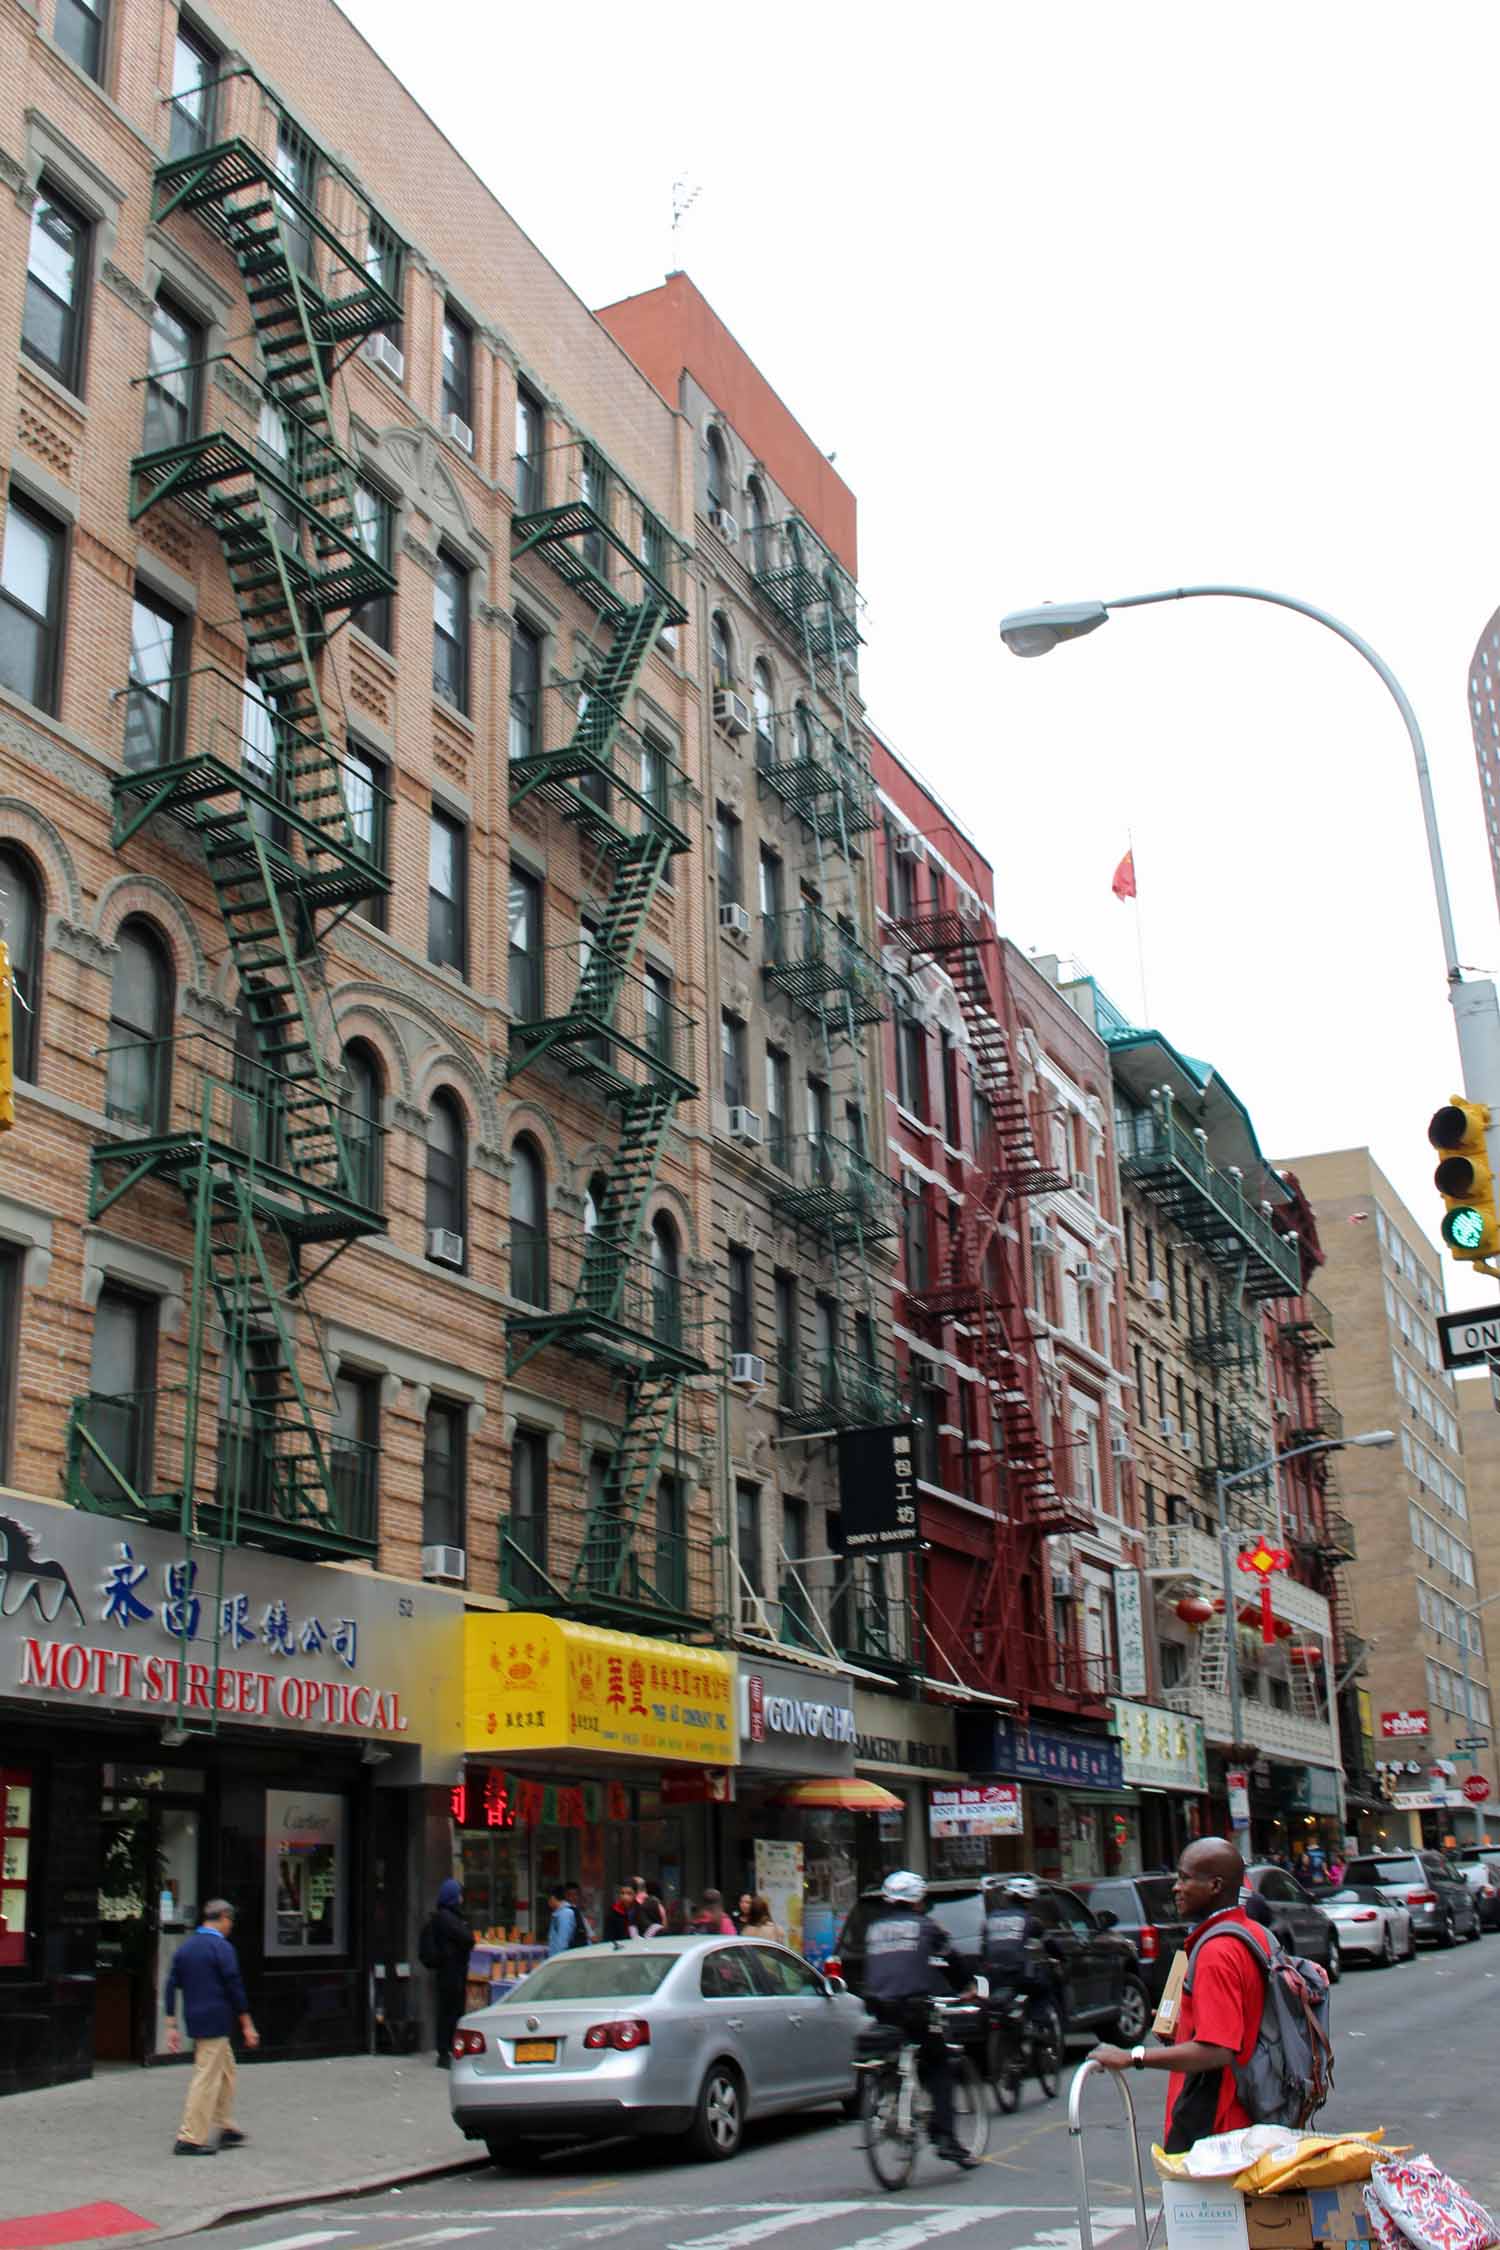 New York, Manhattan, quartier chinois, maisons typiques